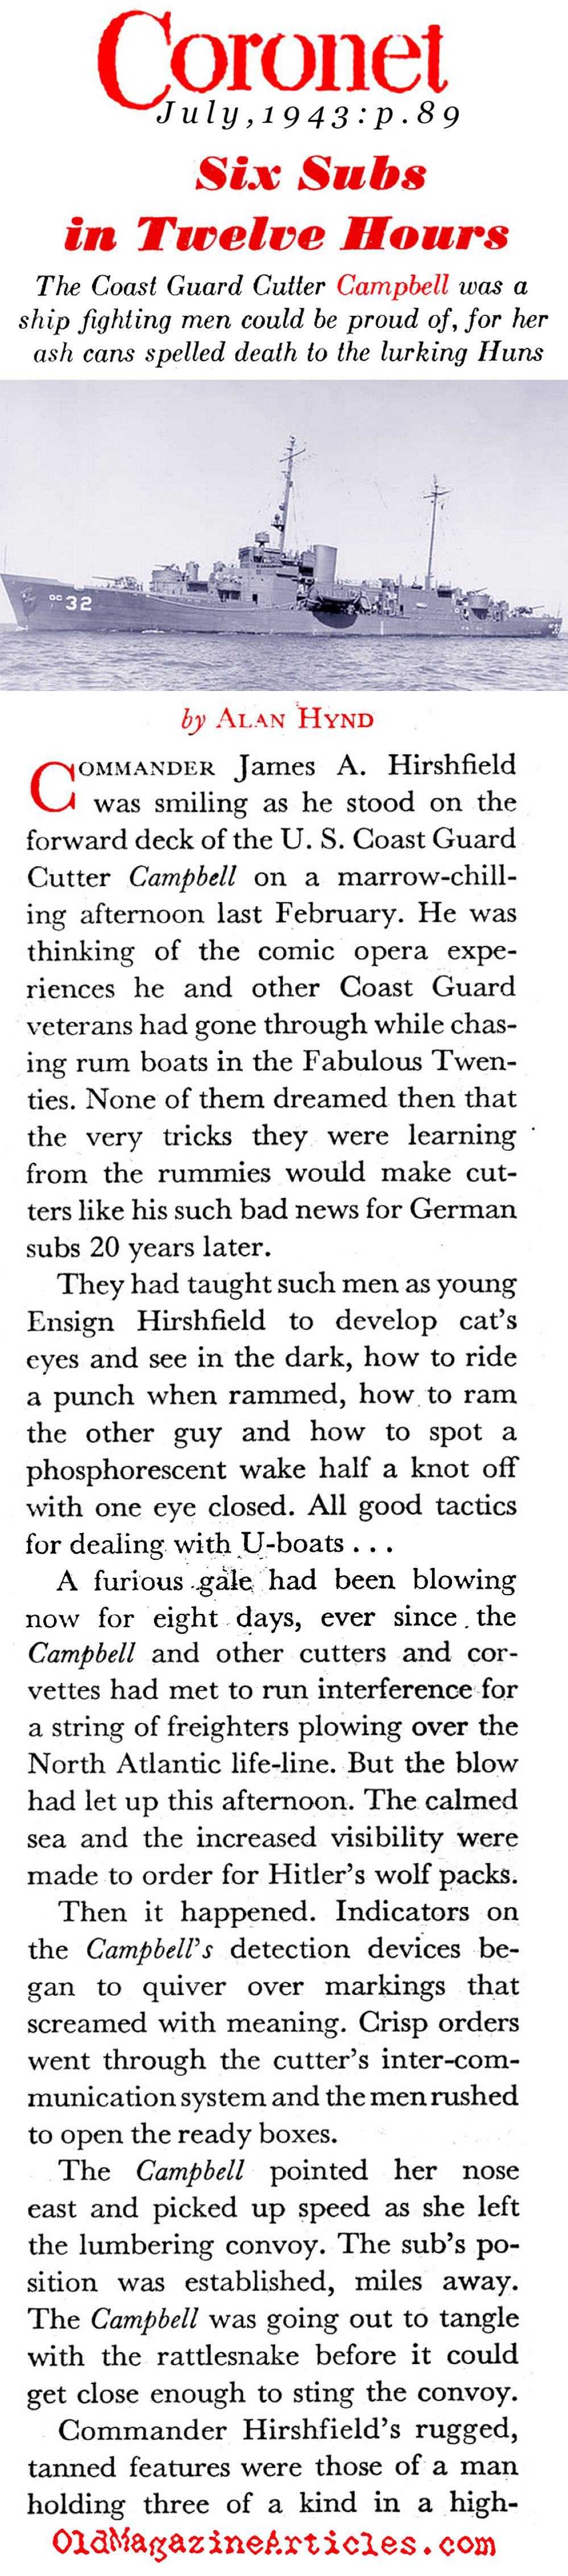 The War On U-Boats (Coronet Magazine, 1943)